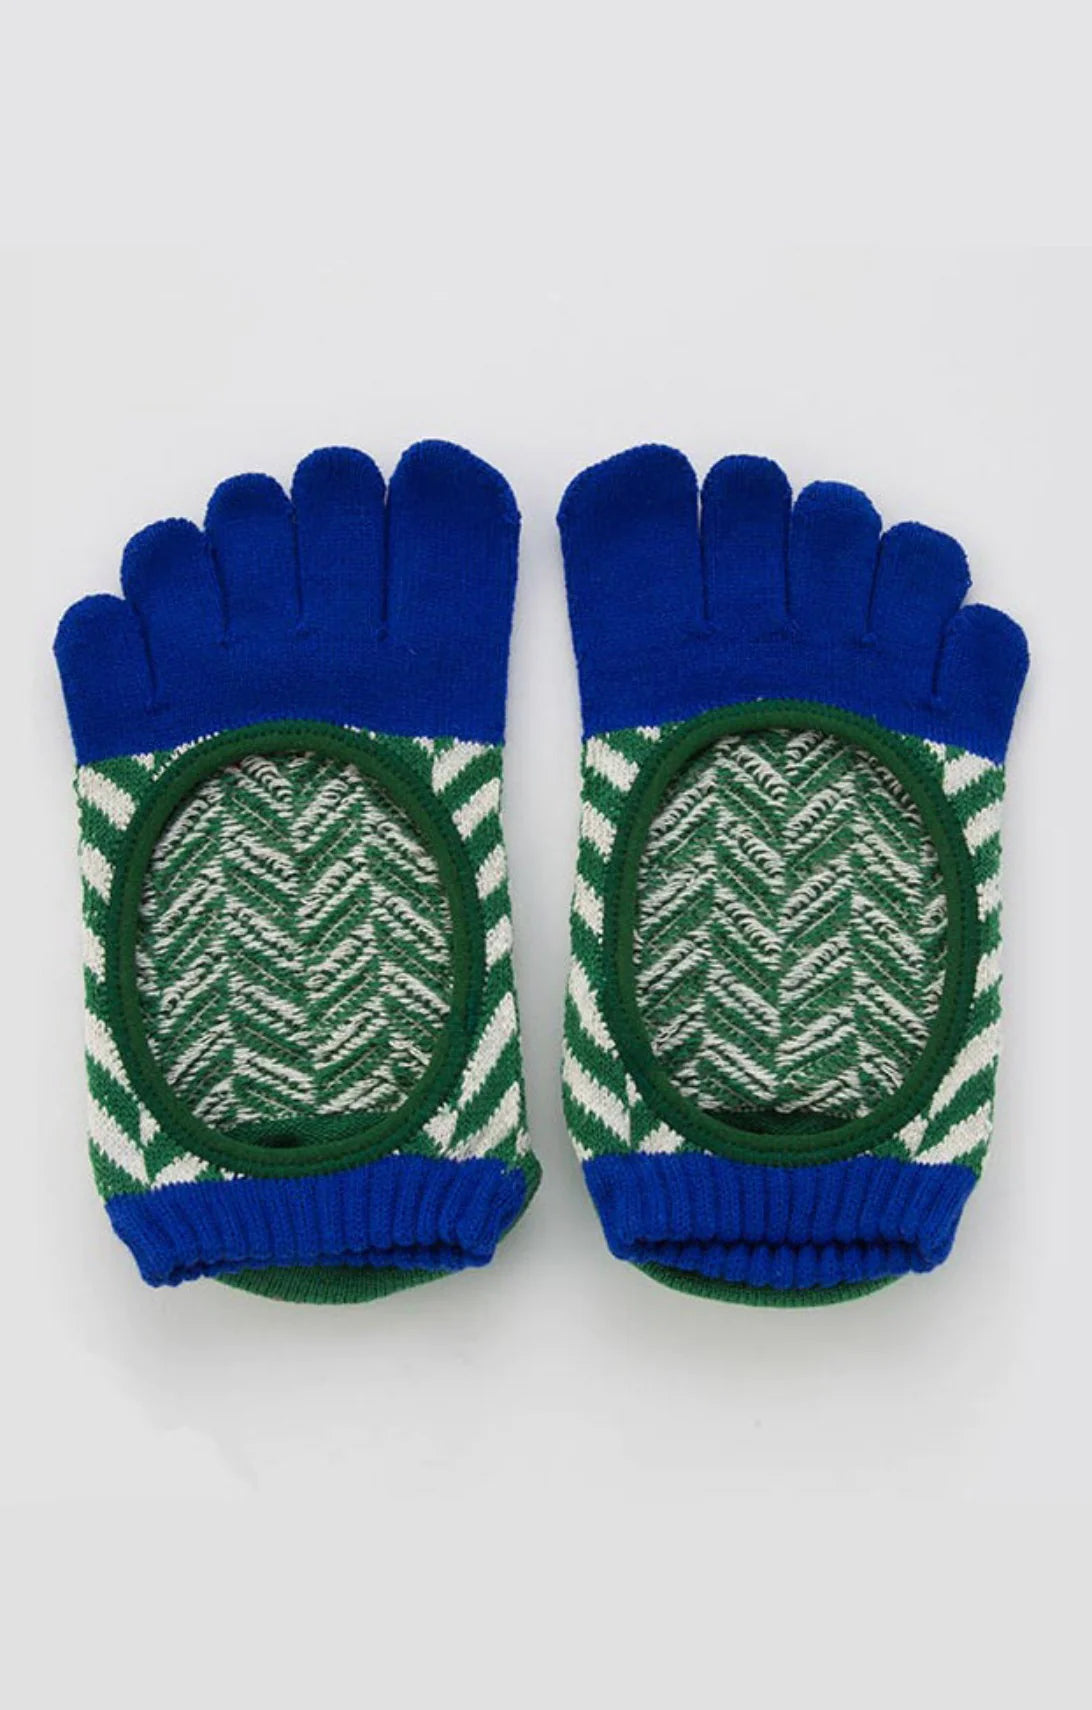 Knitido plus’s Organic Cotton Herringbone Liner Socks in BLUE color